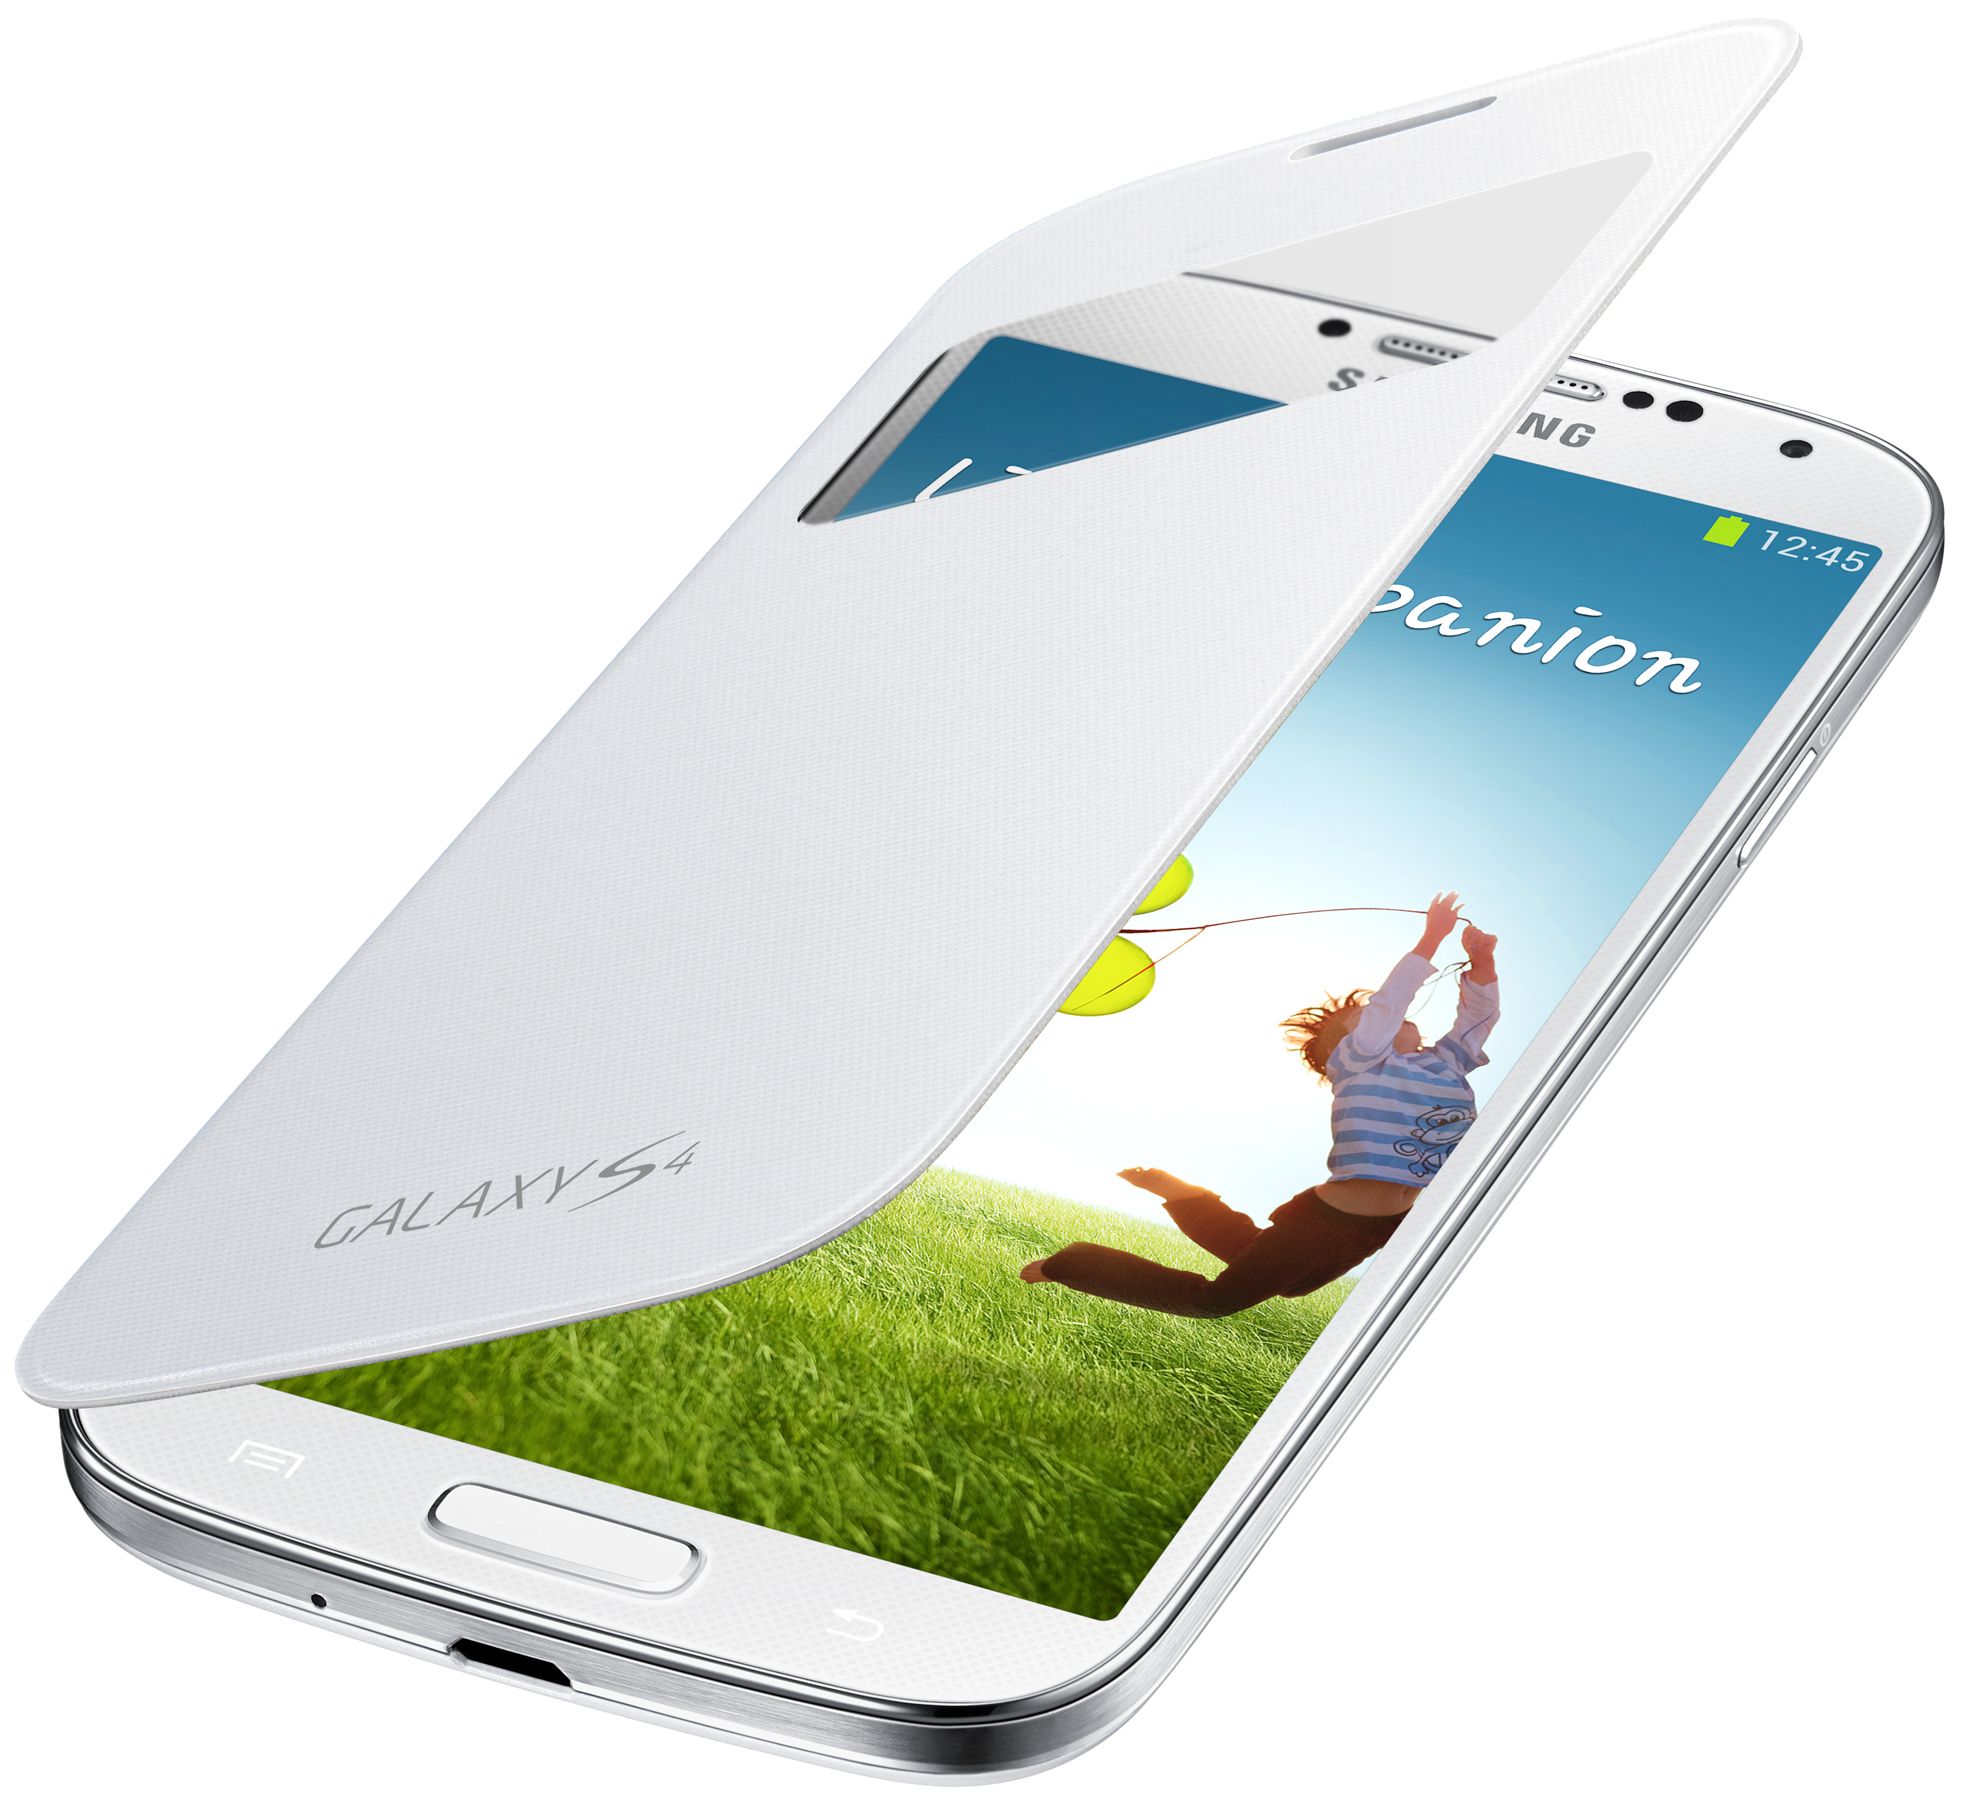 Galaxy s4 купить. Samsung Galaxy s4 i9500. Samsung Galaxy s4 i9500 белый. Samsung Galaxy s4 9500. Samsung Galaxy s4 White.